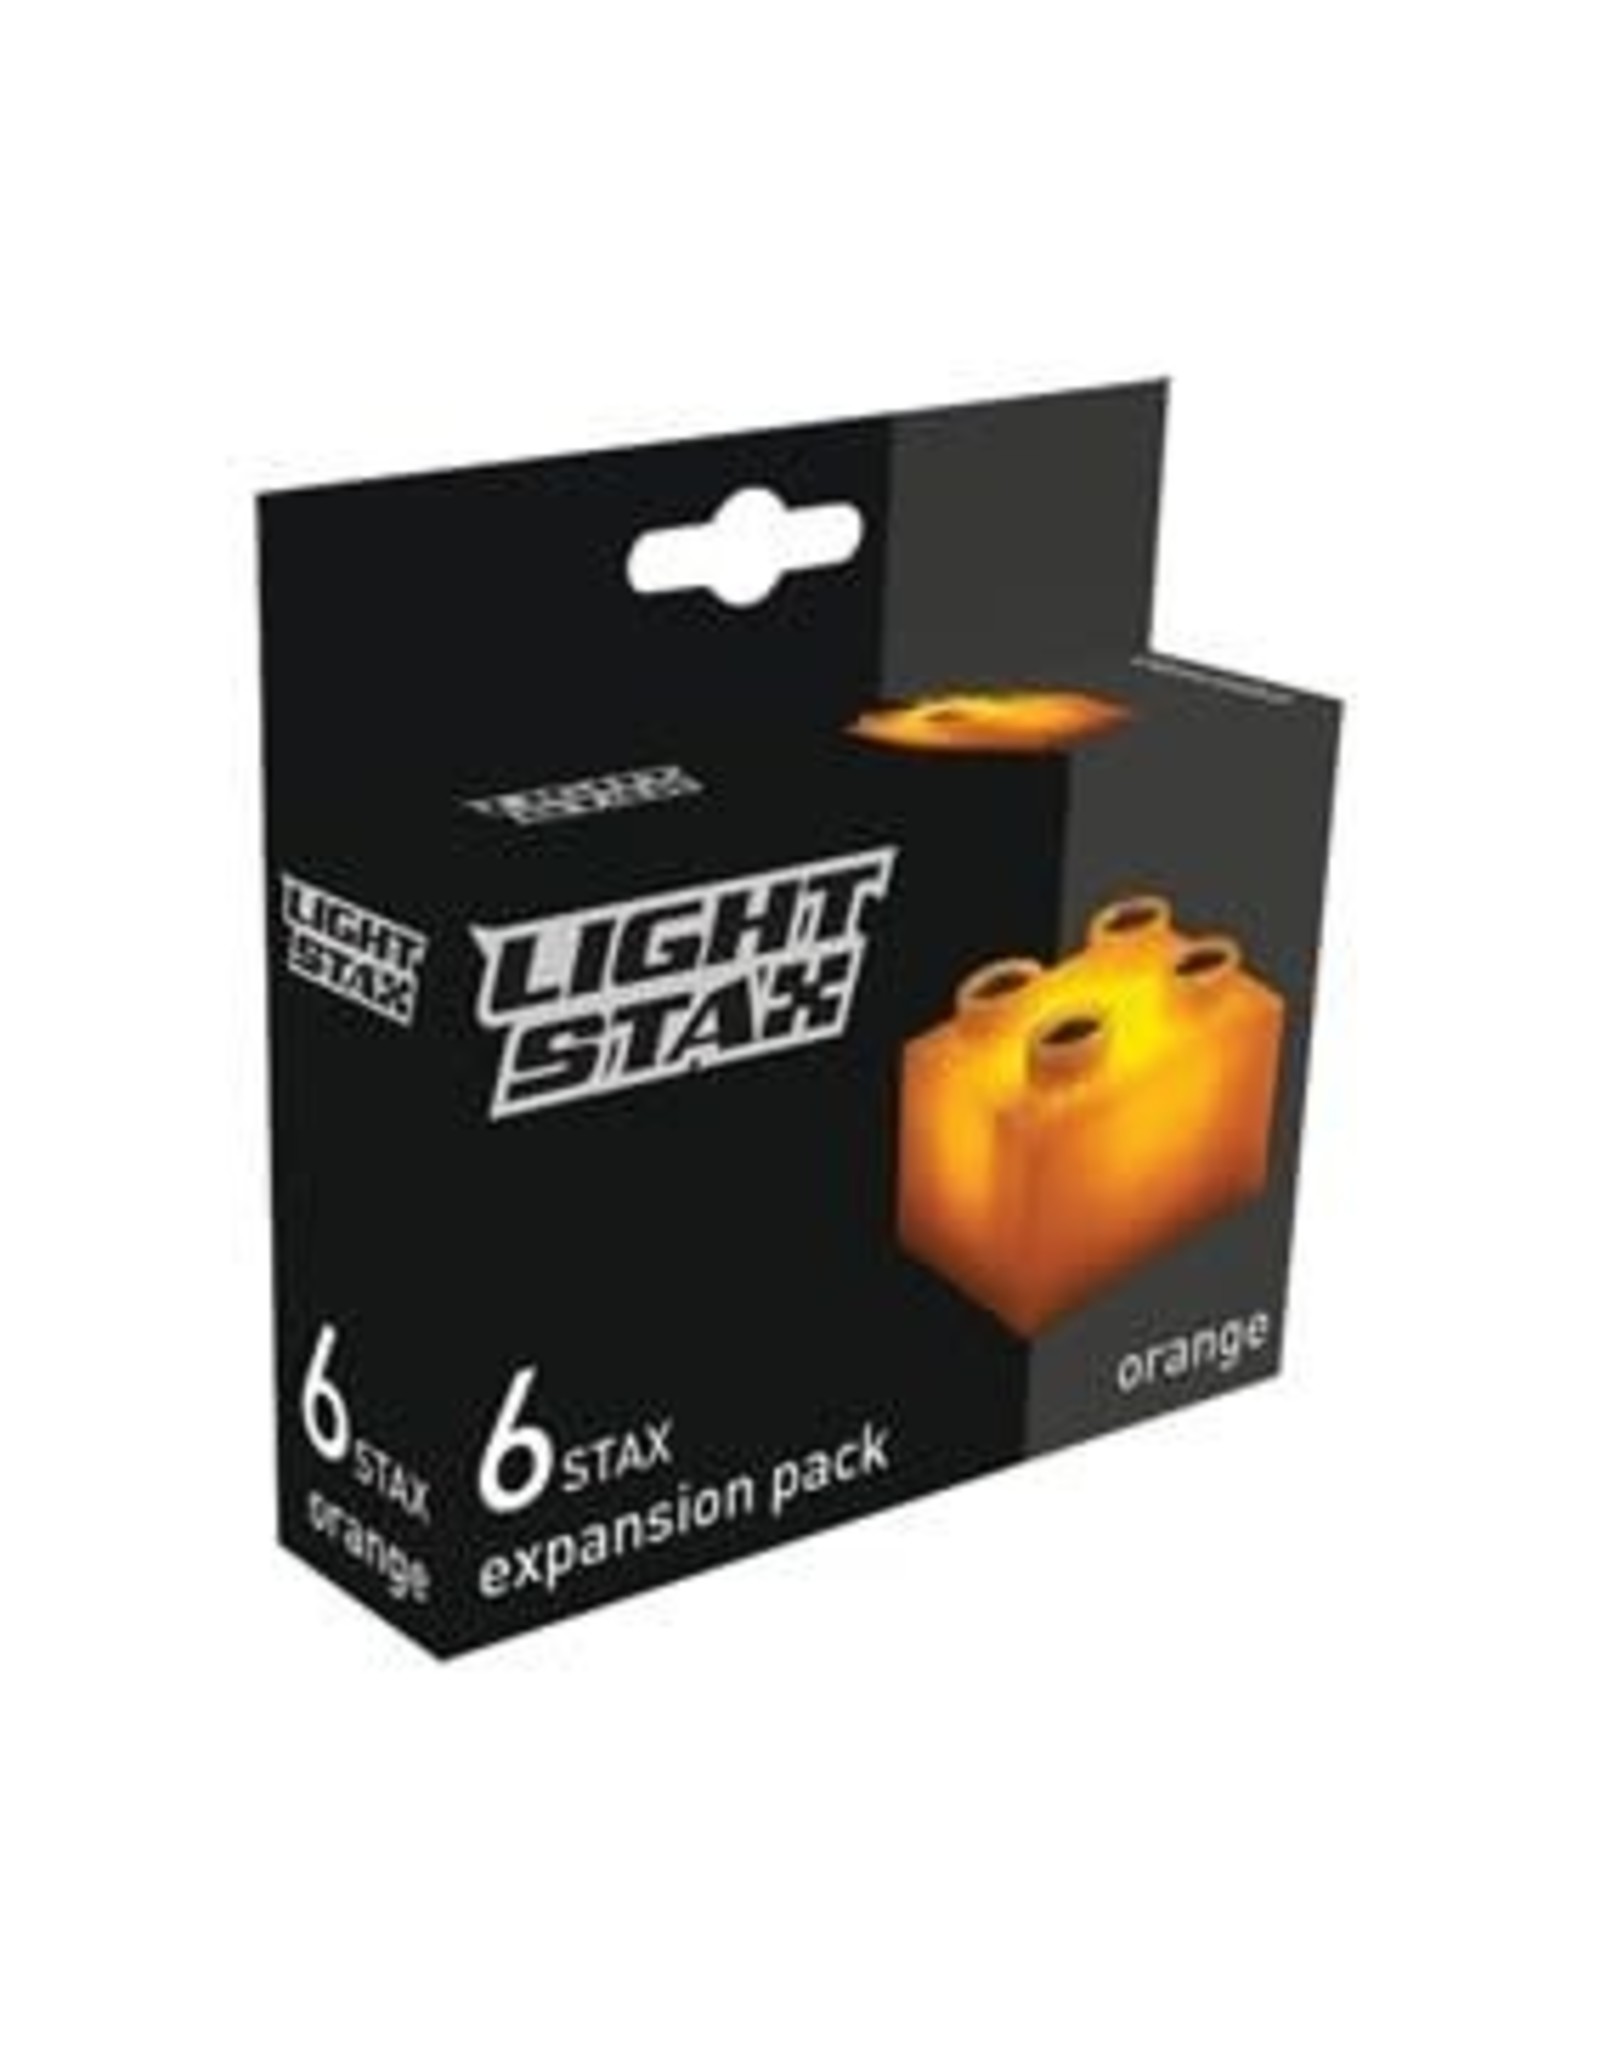 Junior Light Stax - Expansion Pack Orange